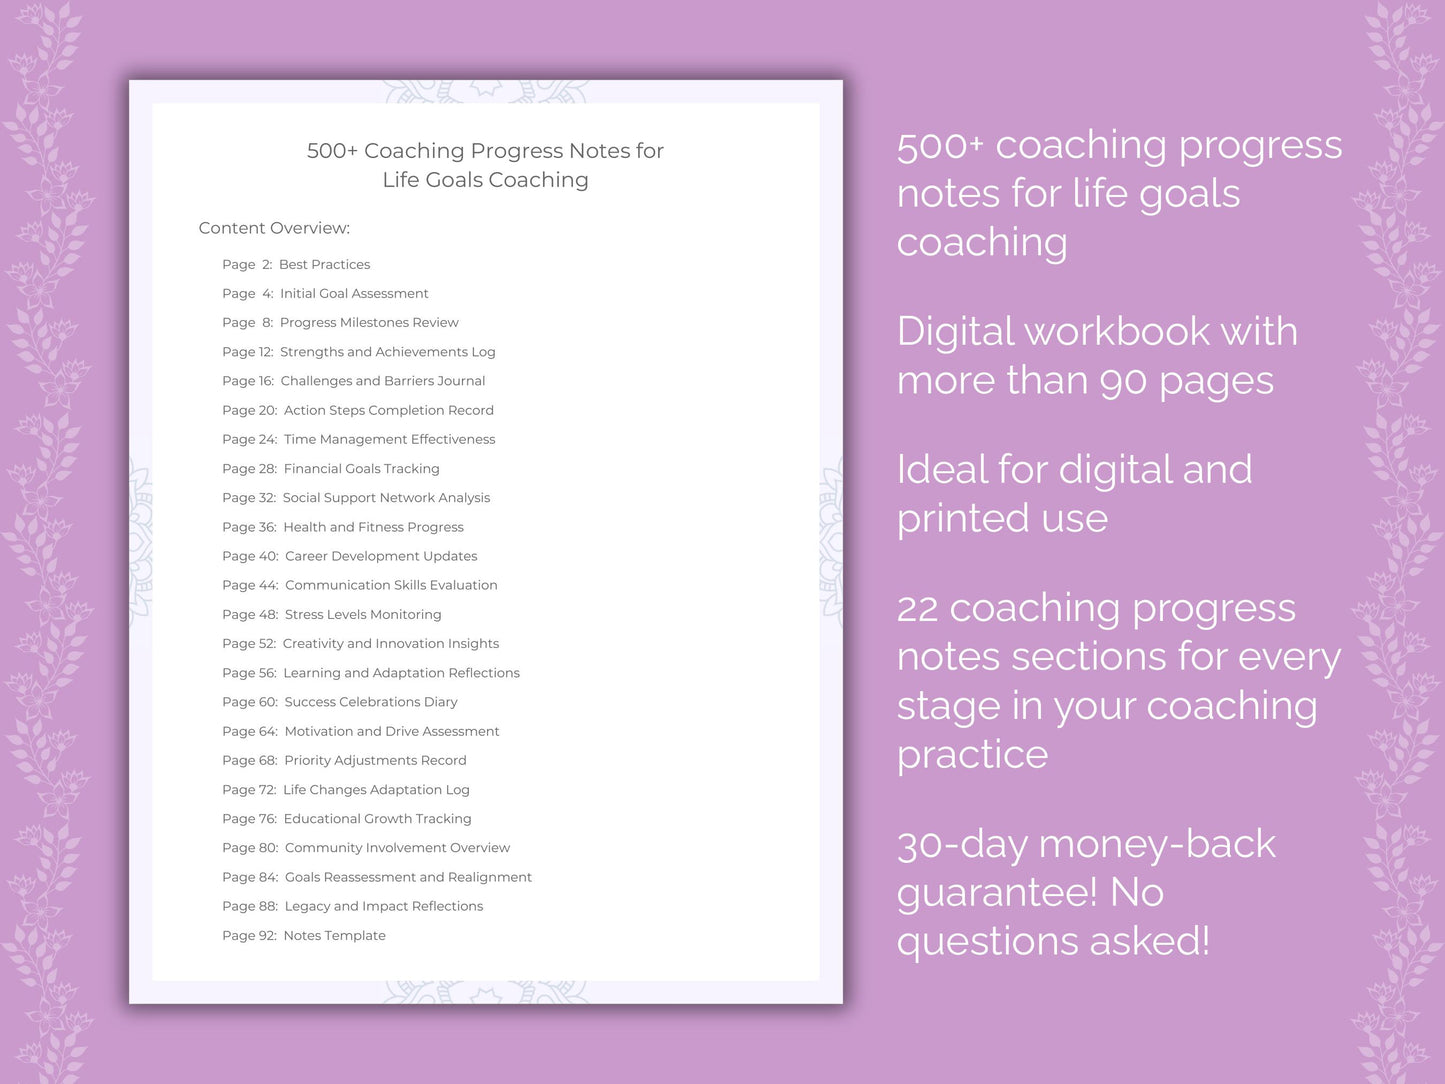 Life Goals Coaching Progress Notes Resource